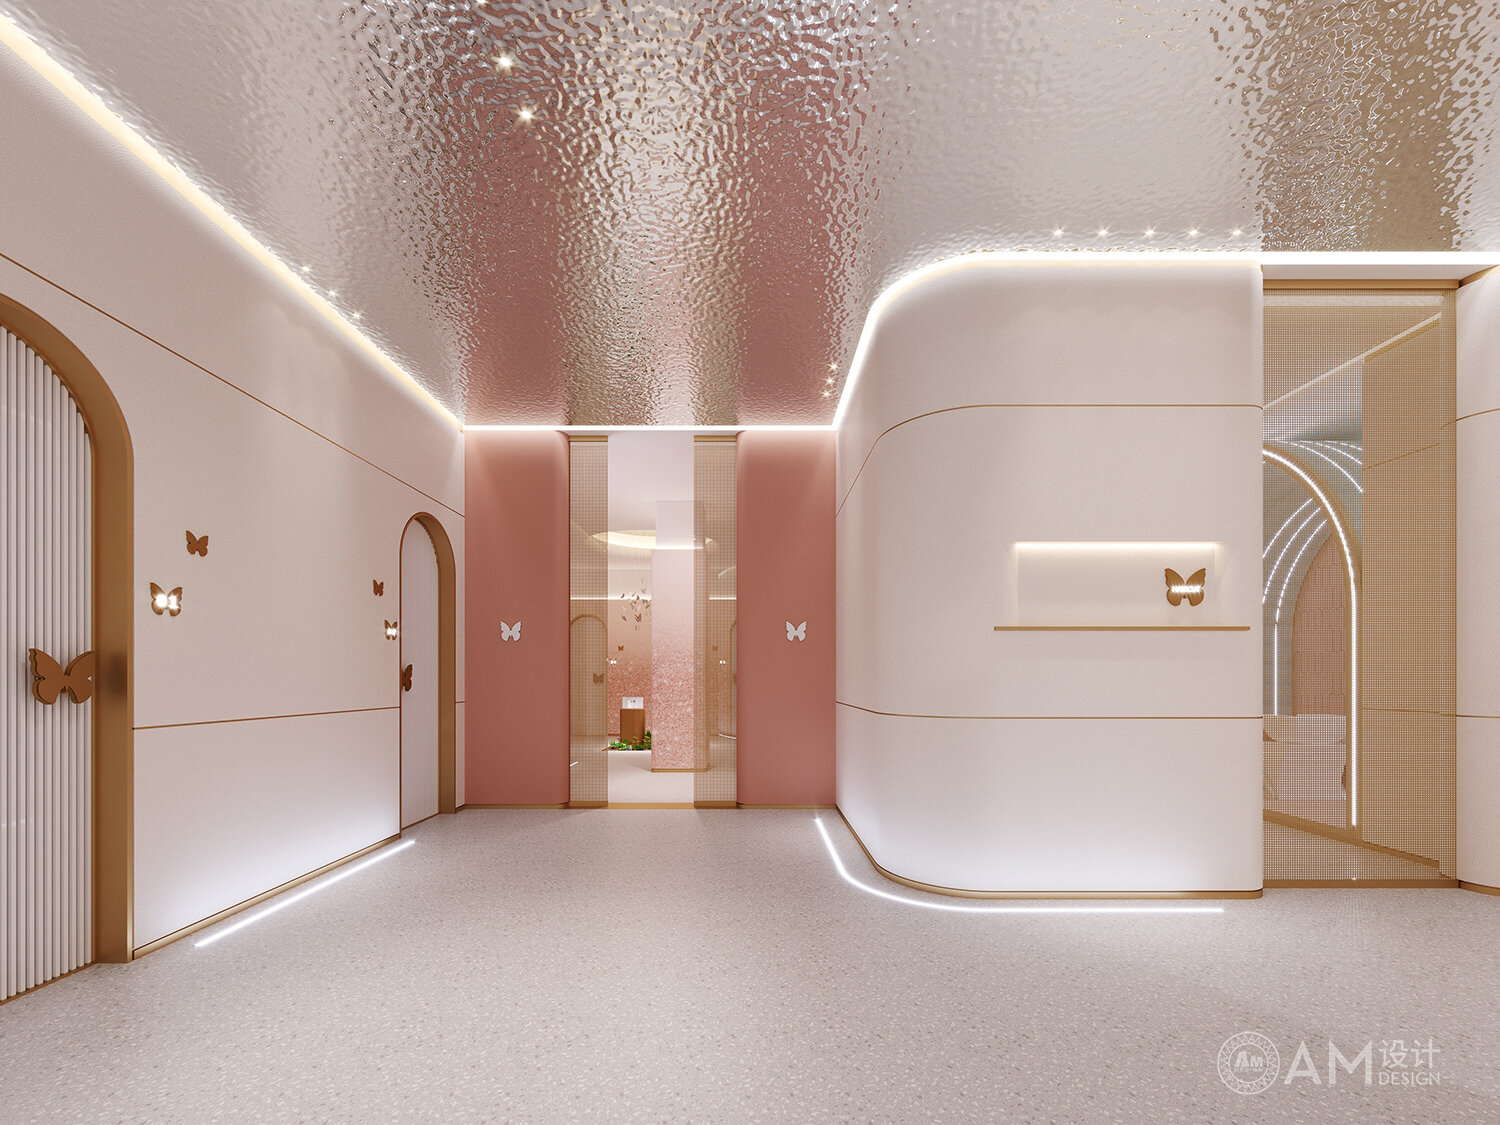 AM | Antisen Beauty Academy Design_Corridor